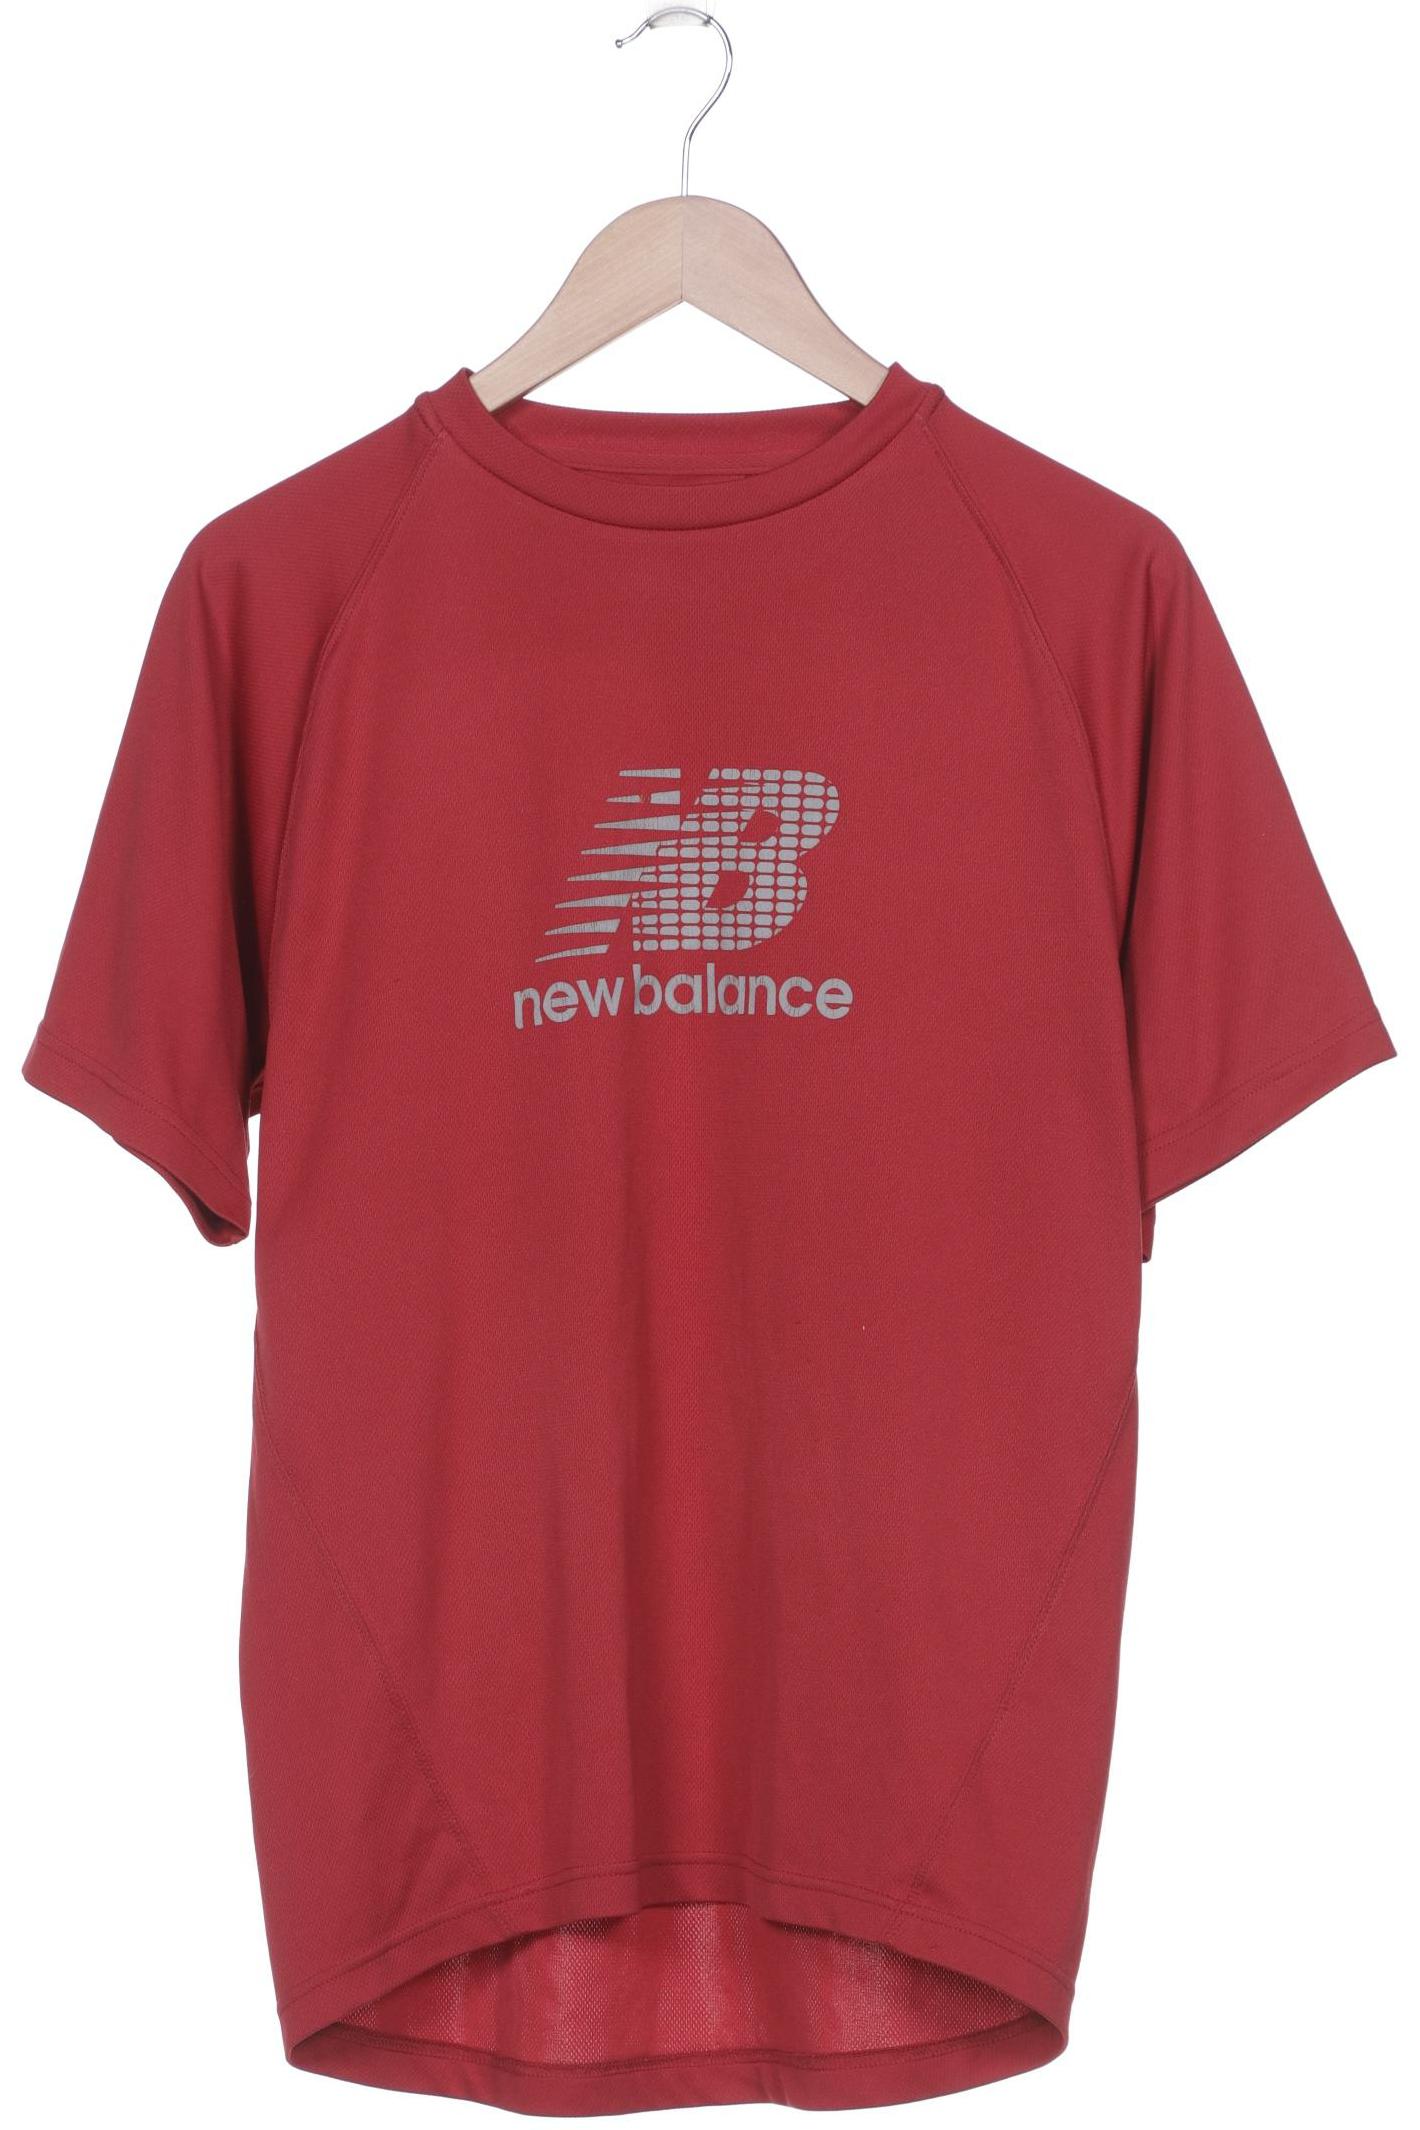 New Balance Herren T-Shirt, rot von New Balance